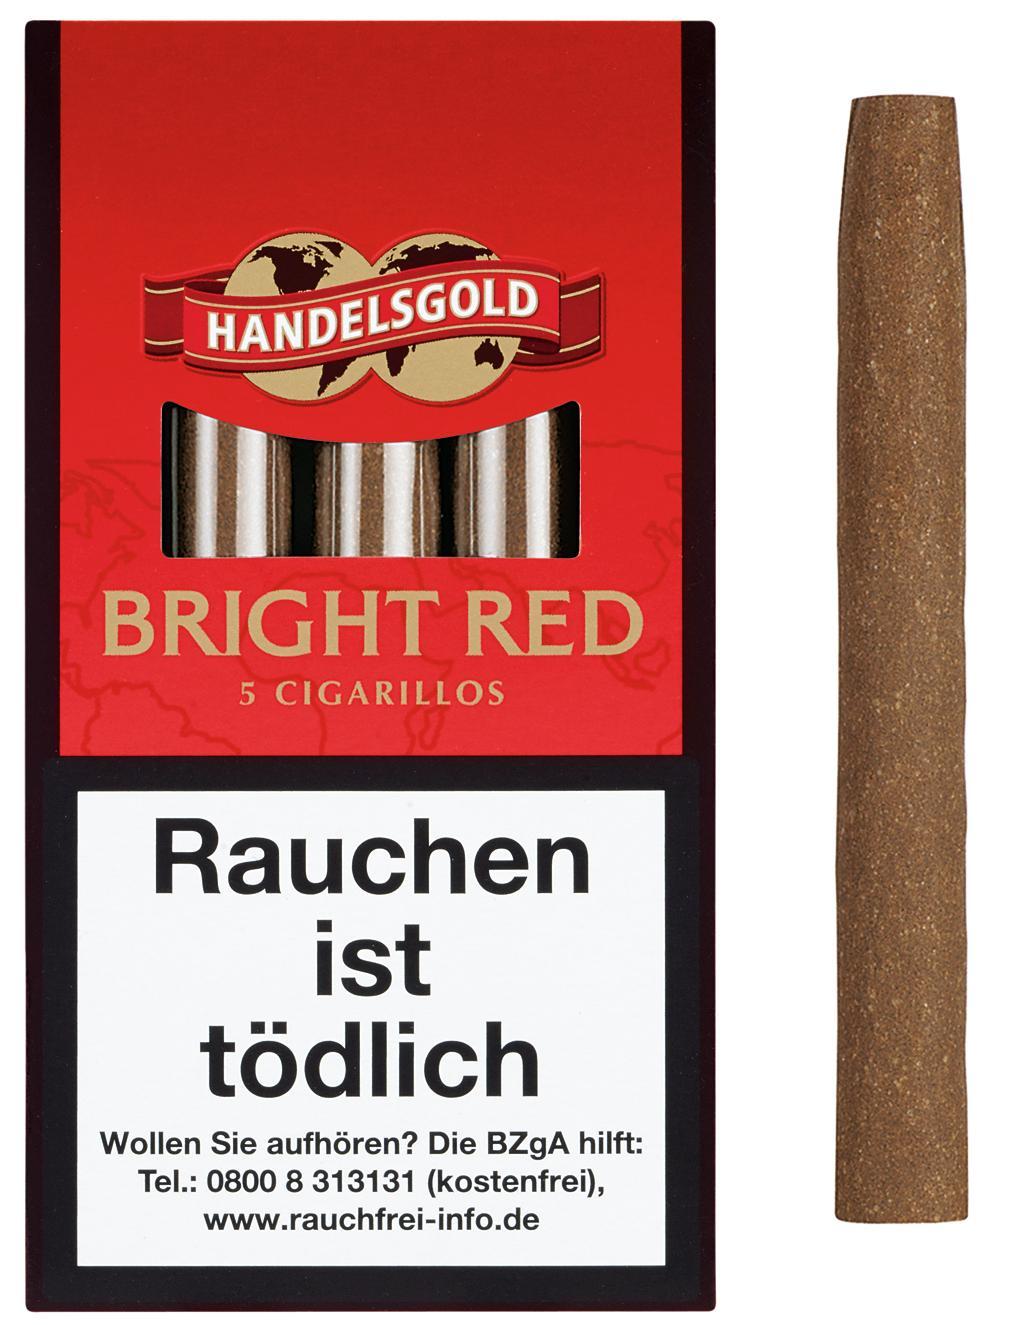 Handelsgold Sweet Bright Red Nr. 203 10 x 5 Zigarillos